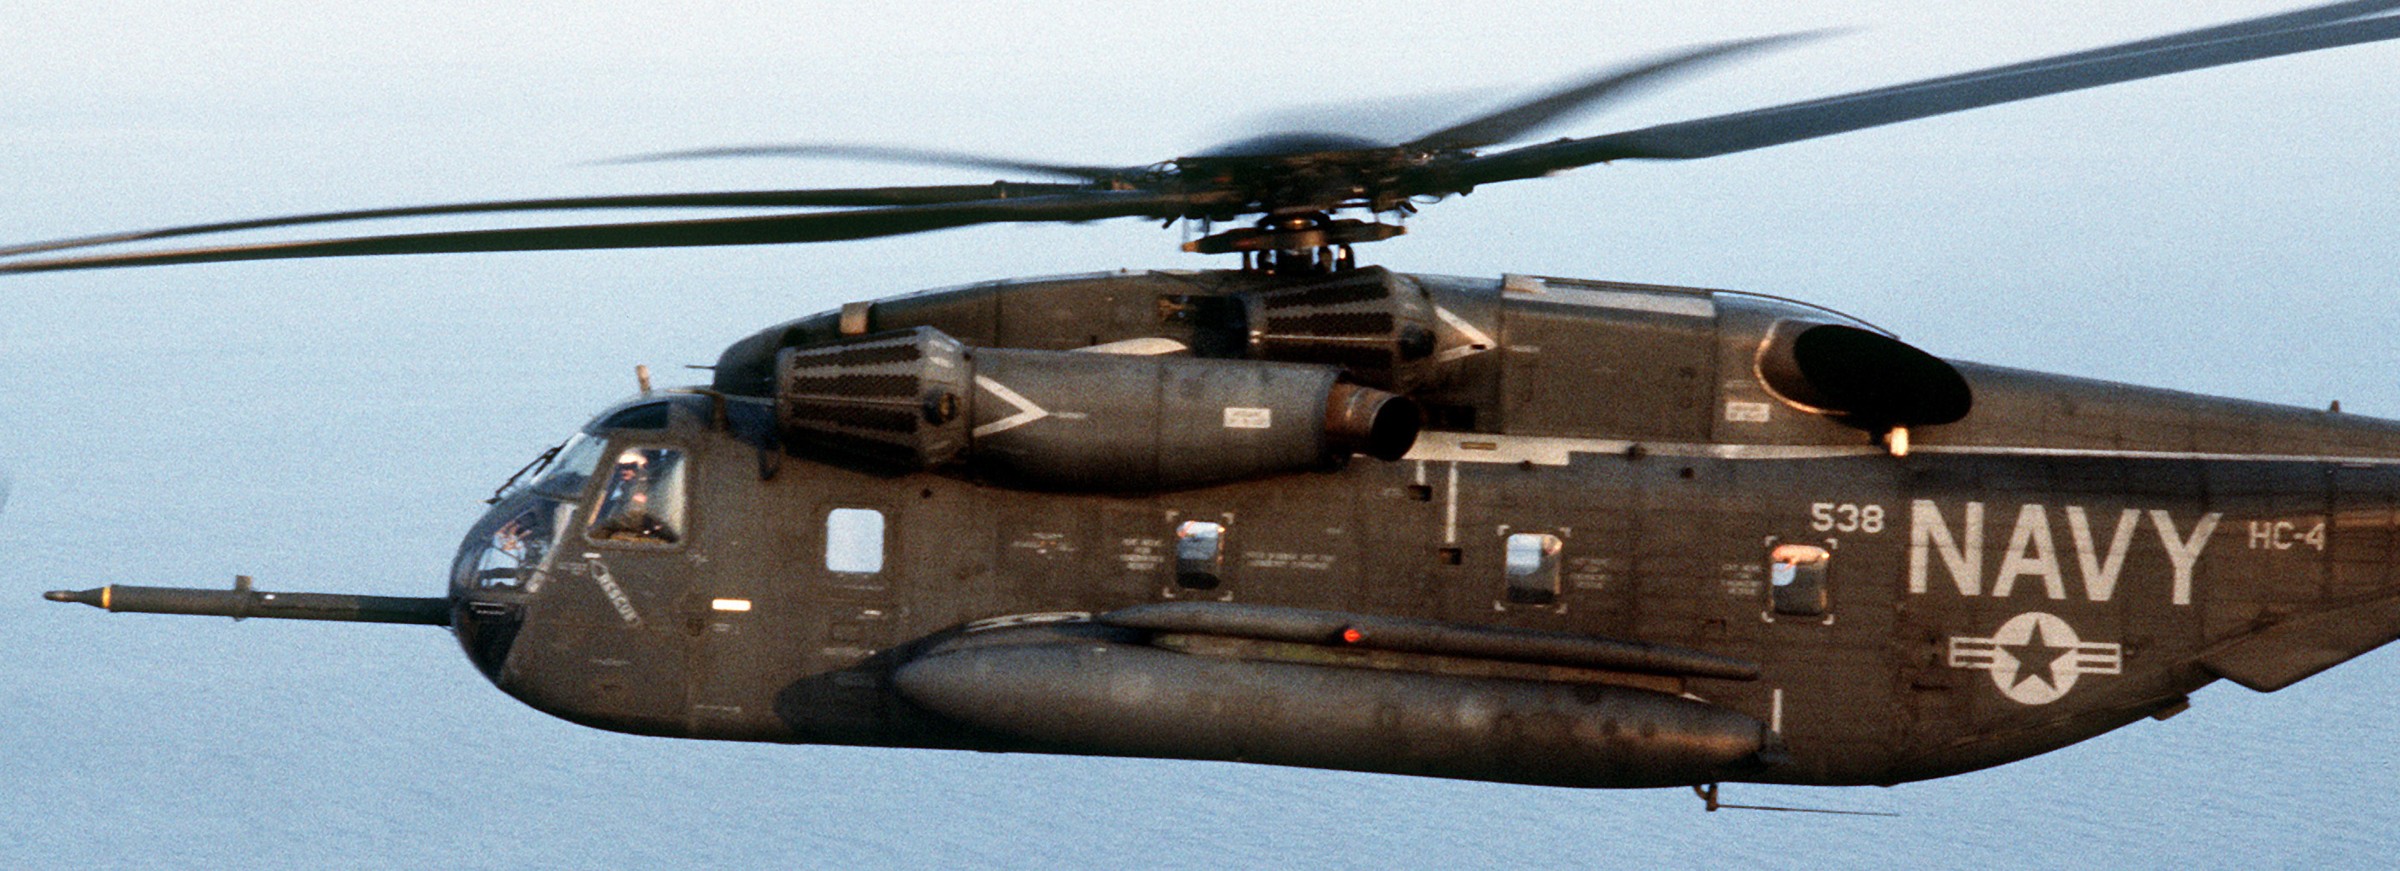 hc-4 black stallions helicopter combat support squadron ch-53e super stallion 34